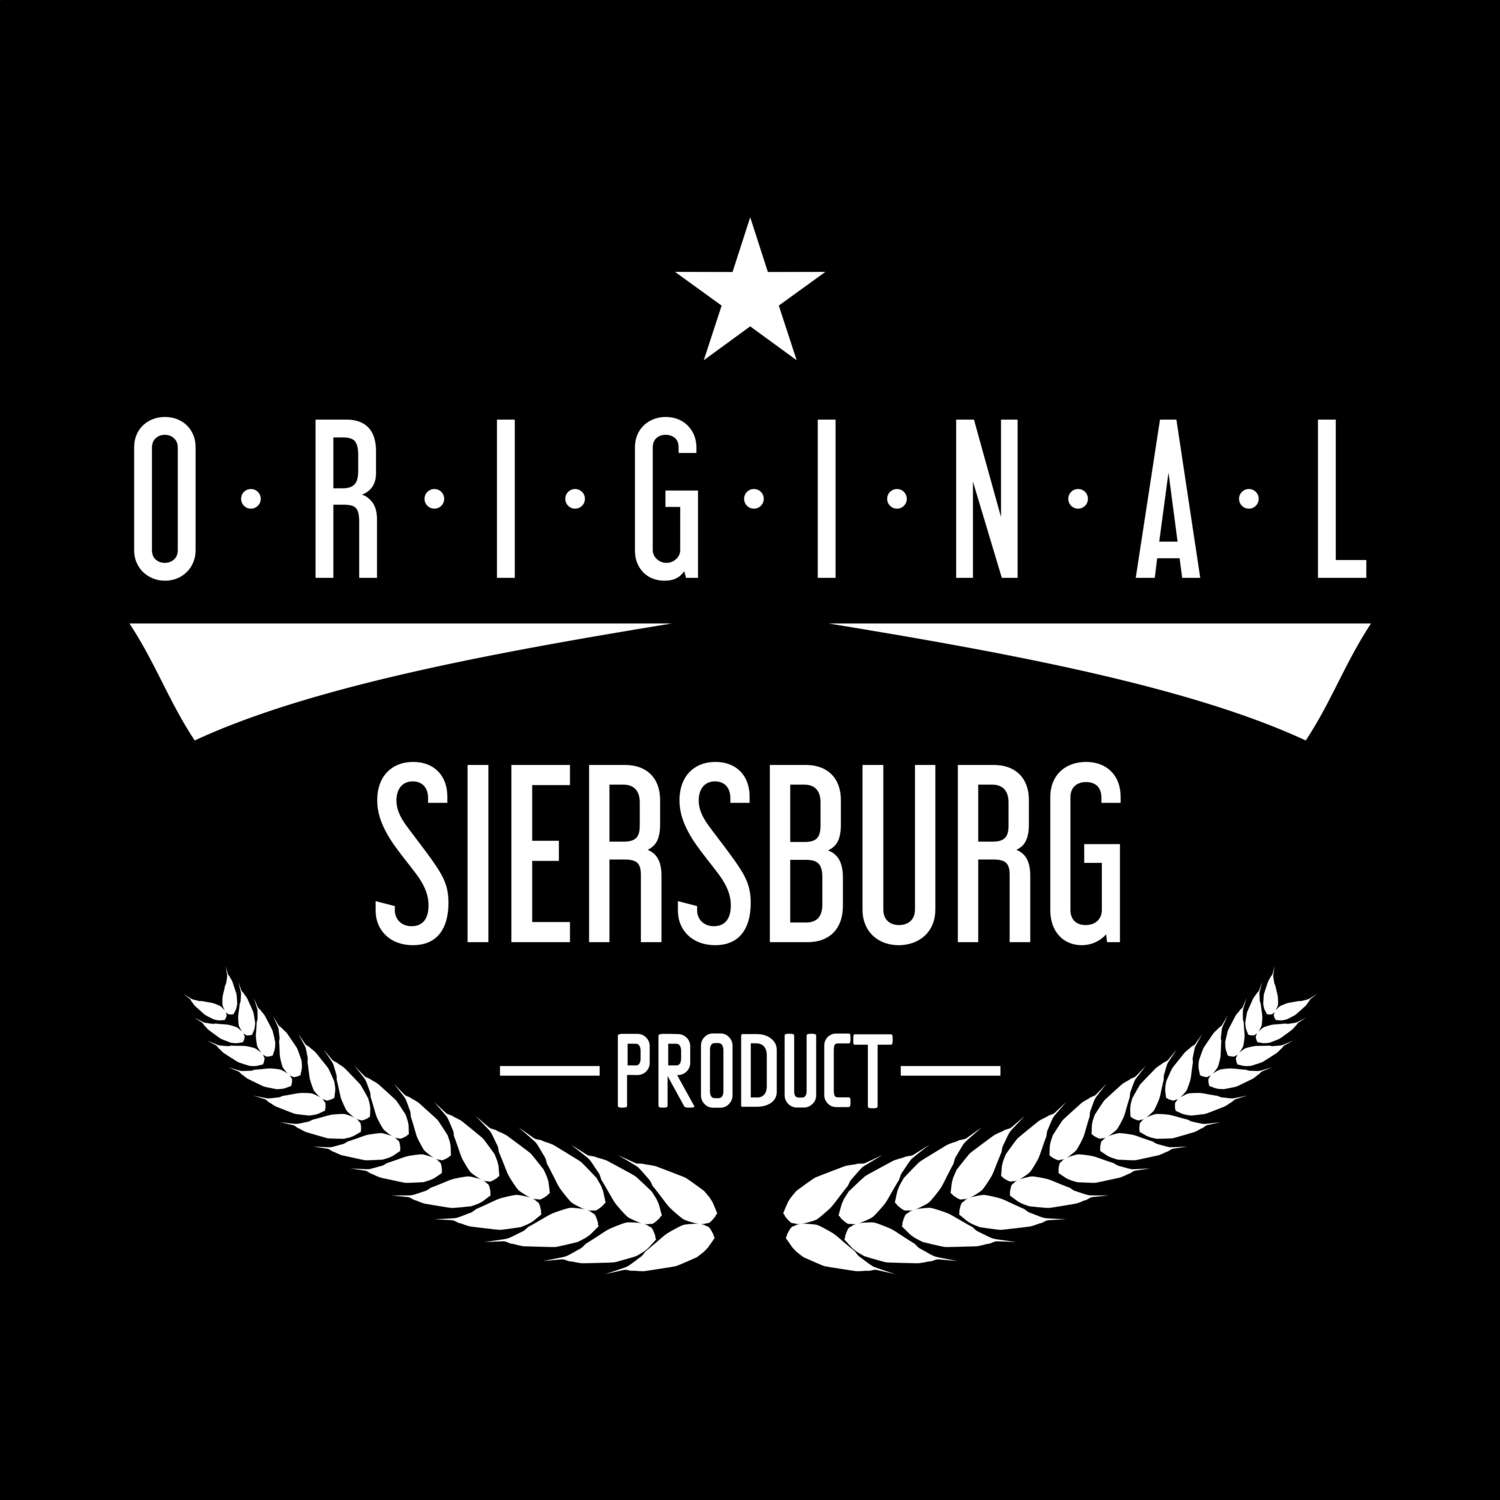 Siersburg T-Shirt »Original Product«